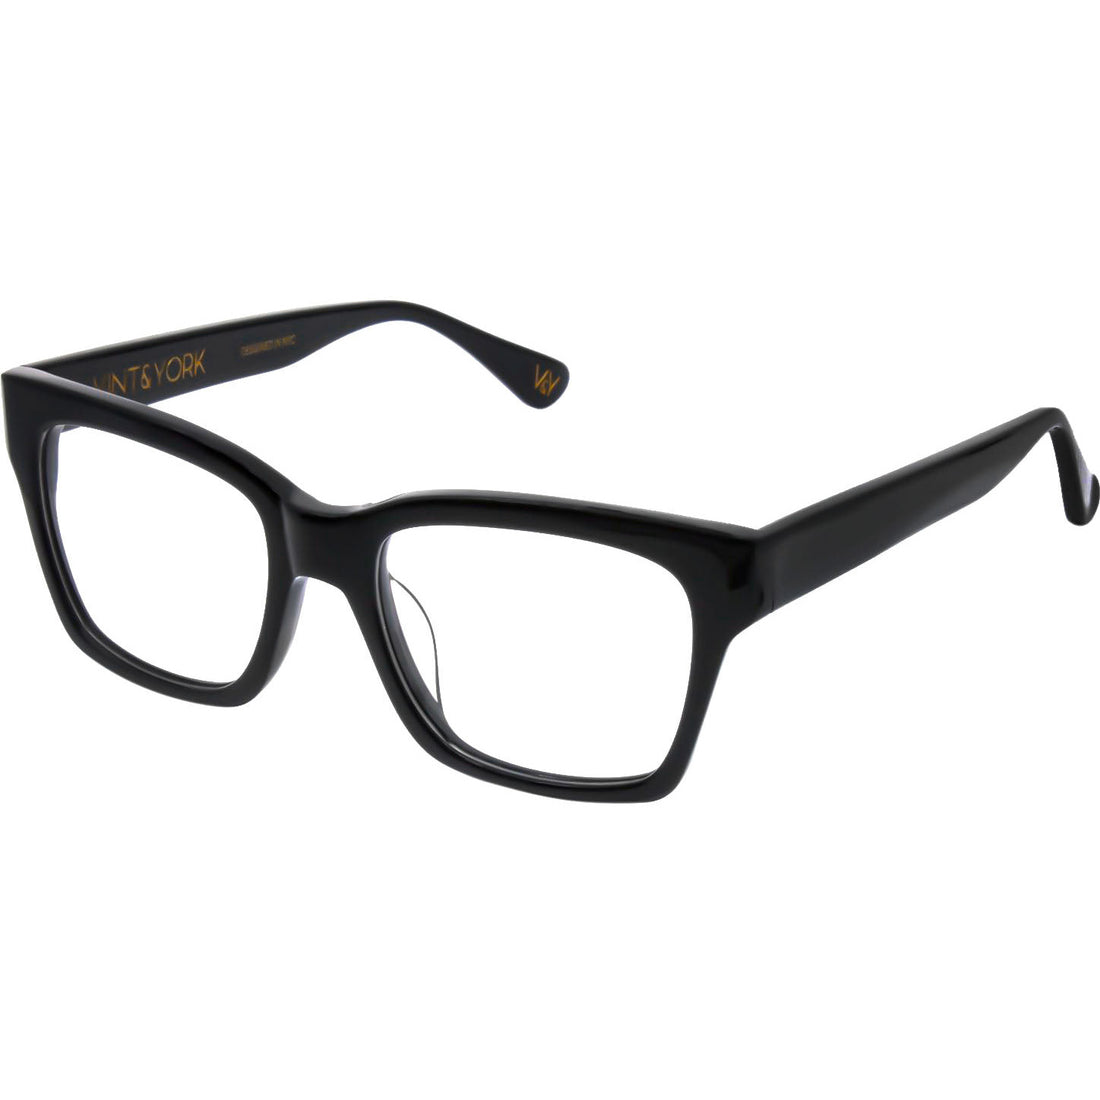 DAPPER Square Eyeglasses – Vint & York